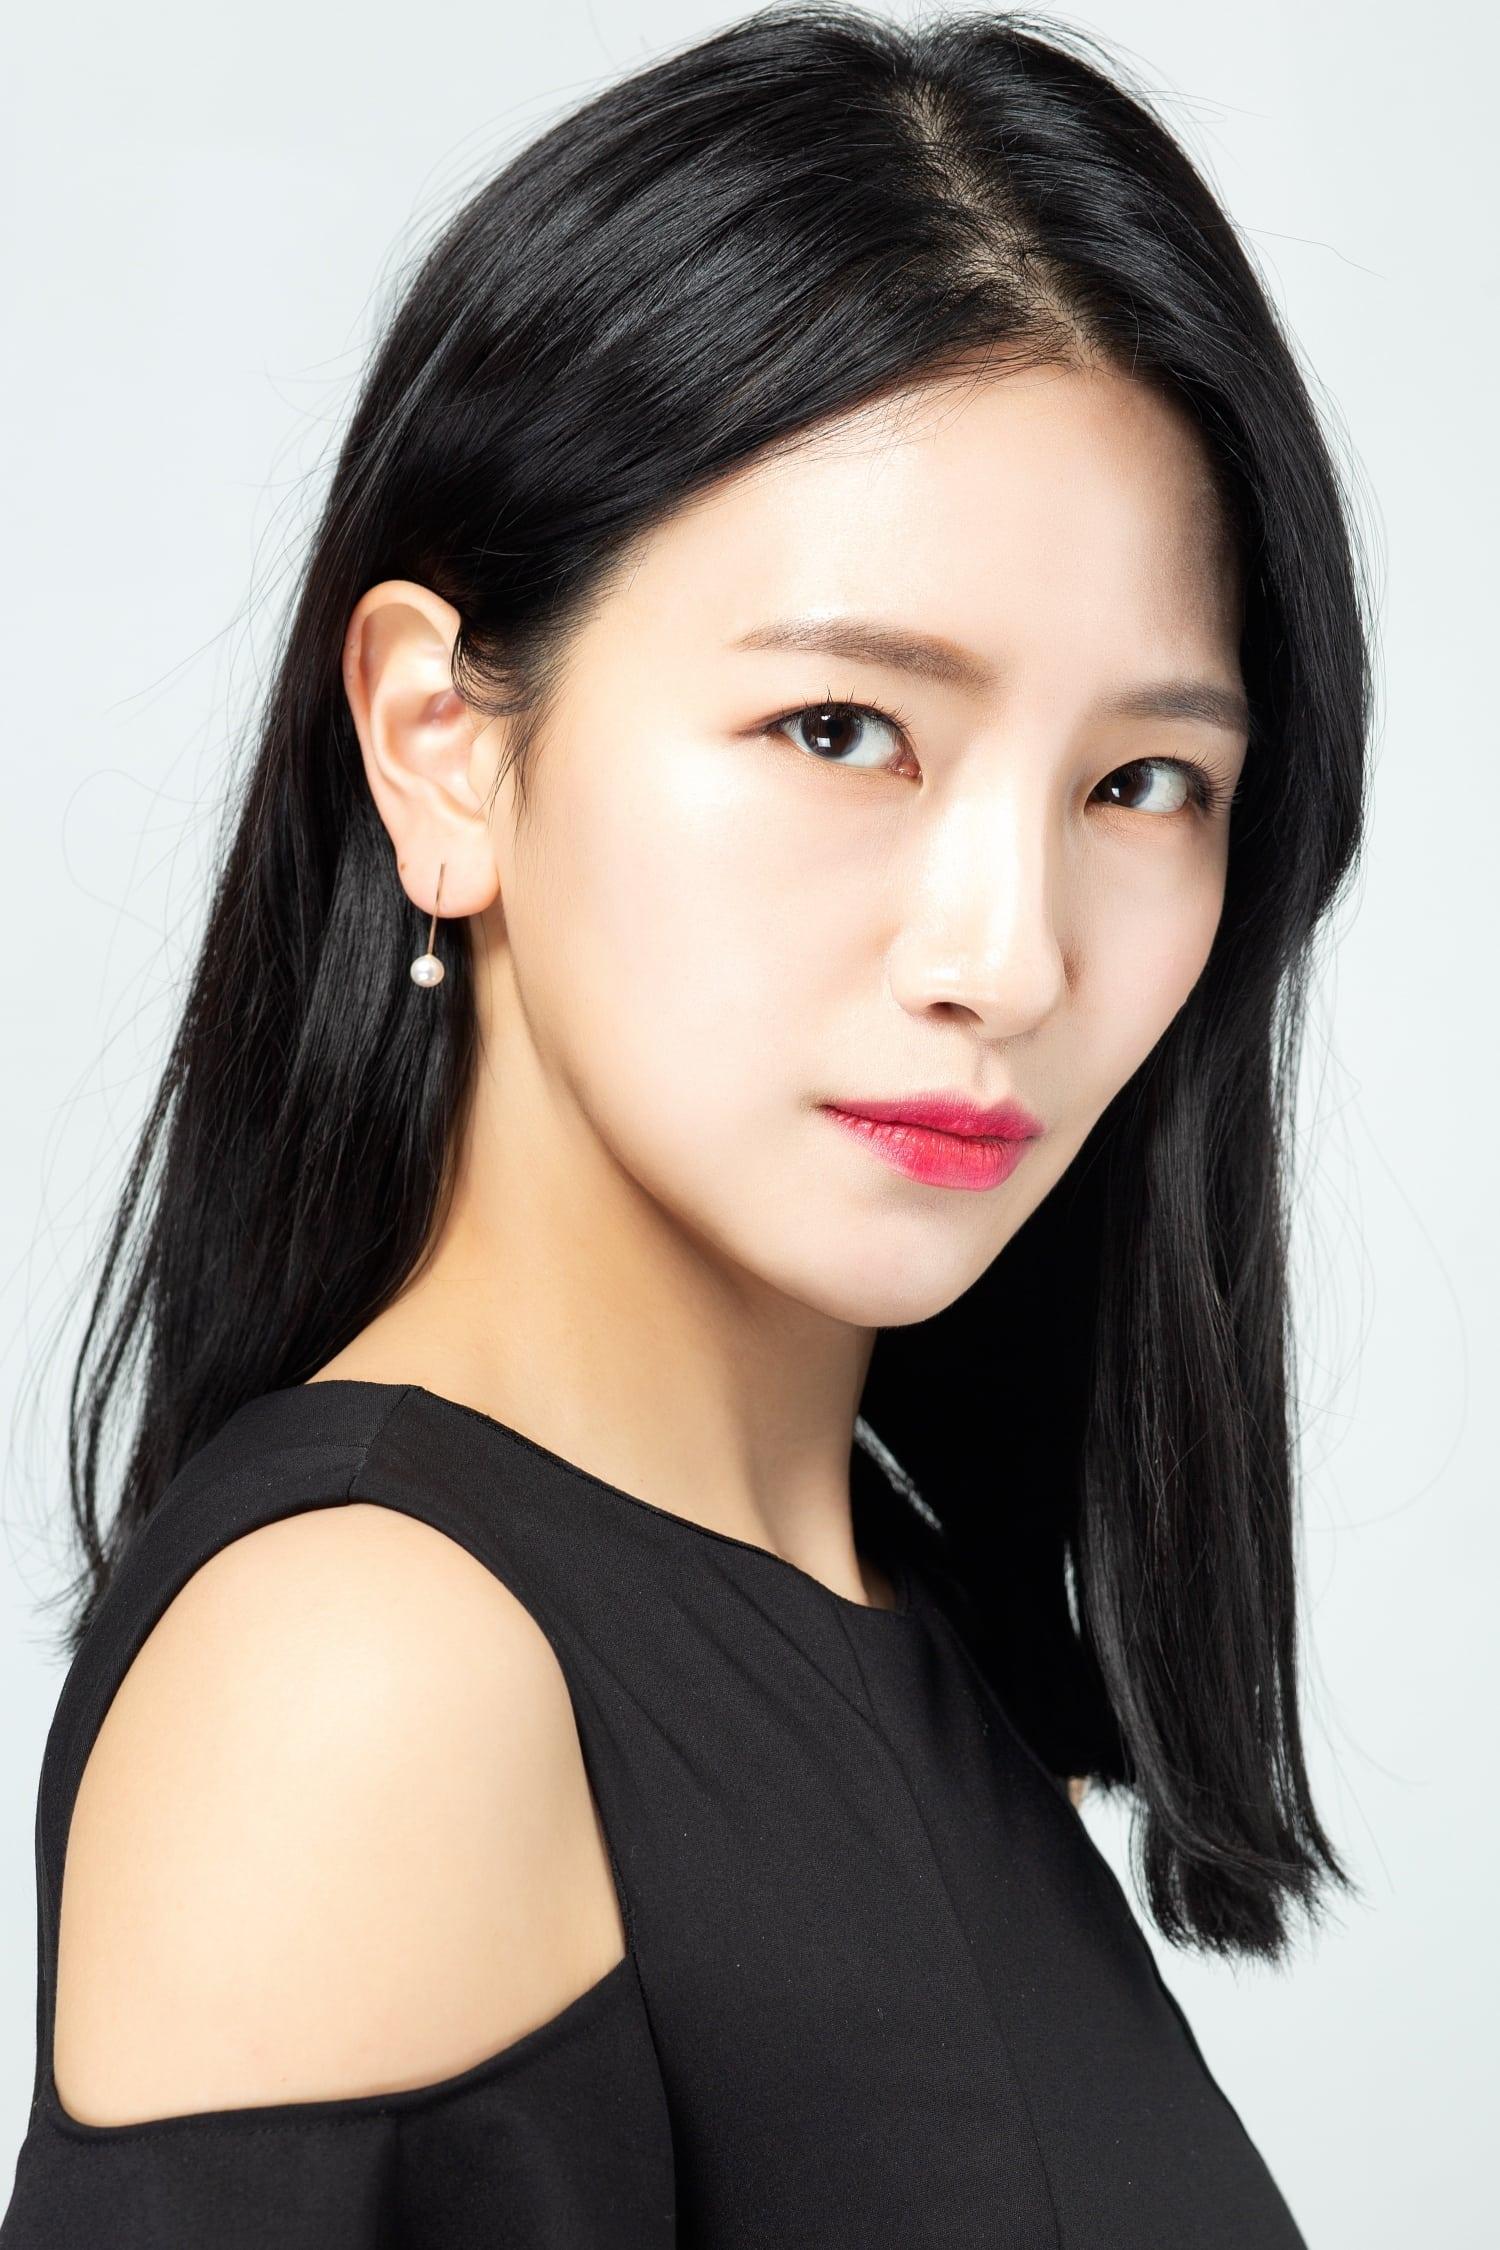 Baek Eun-hae | [Hotel manager of the Hotel Emros maid team]